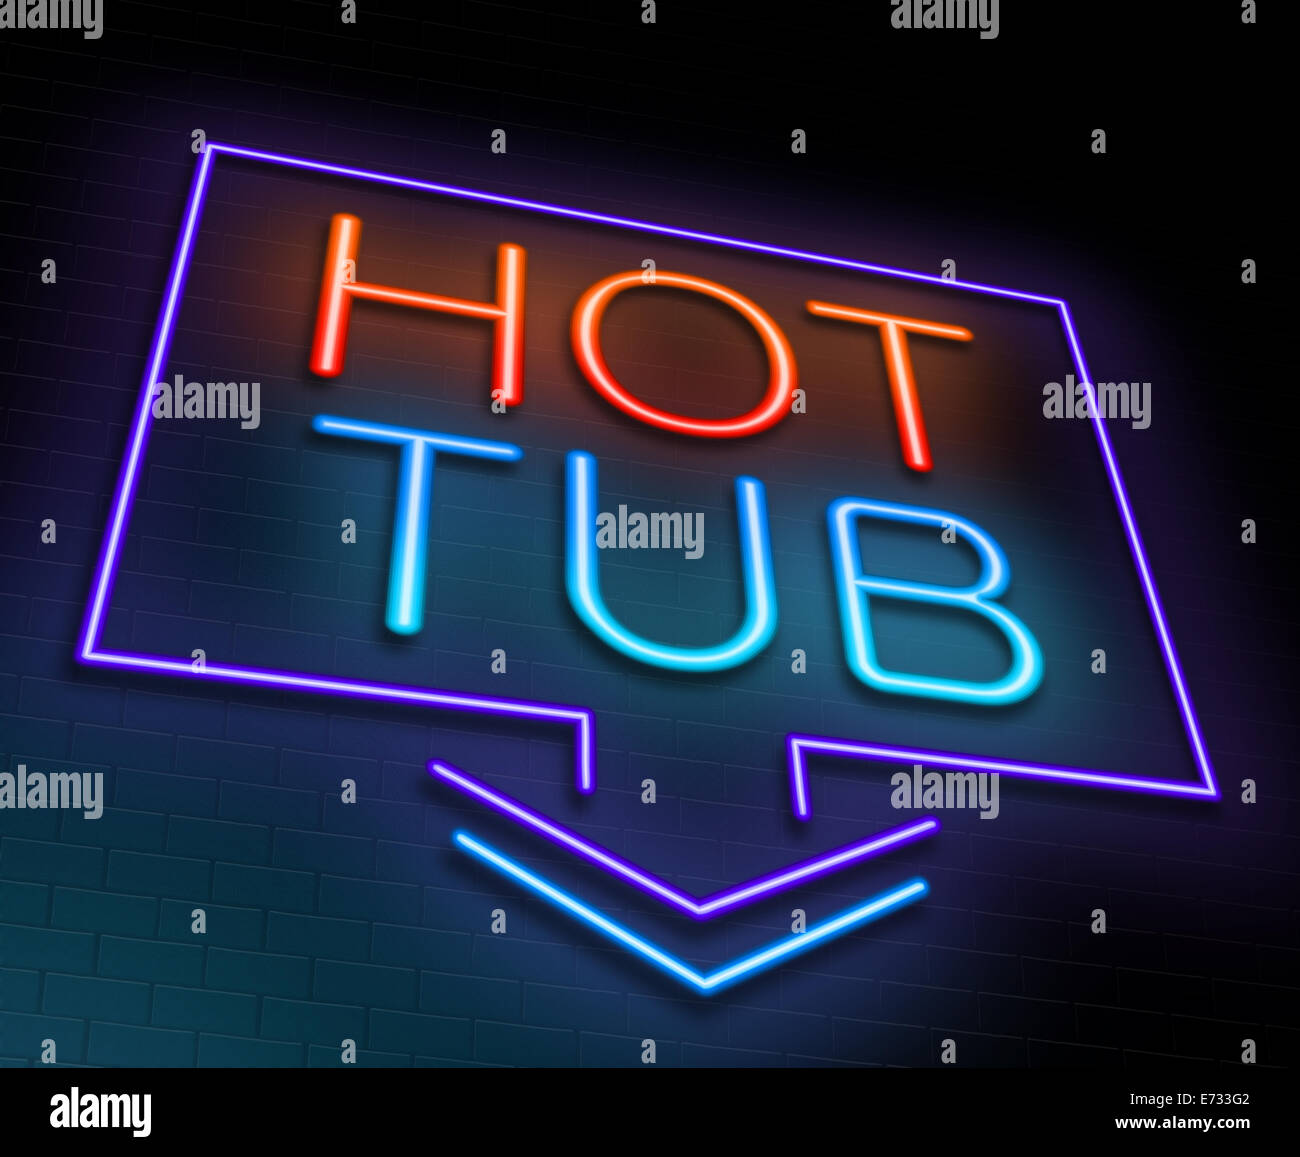 Hot tub concept. Stock Photo